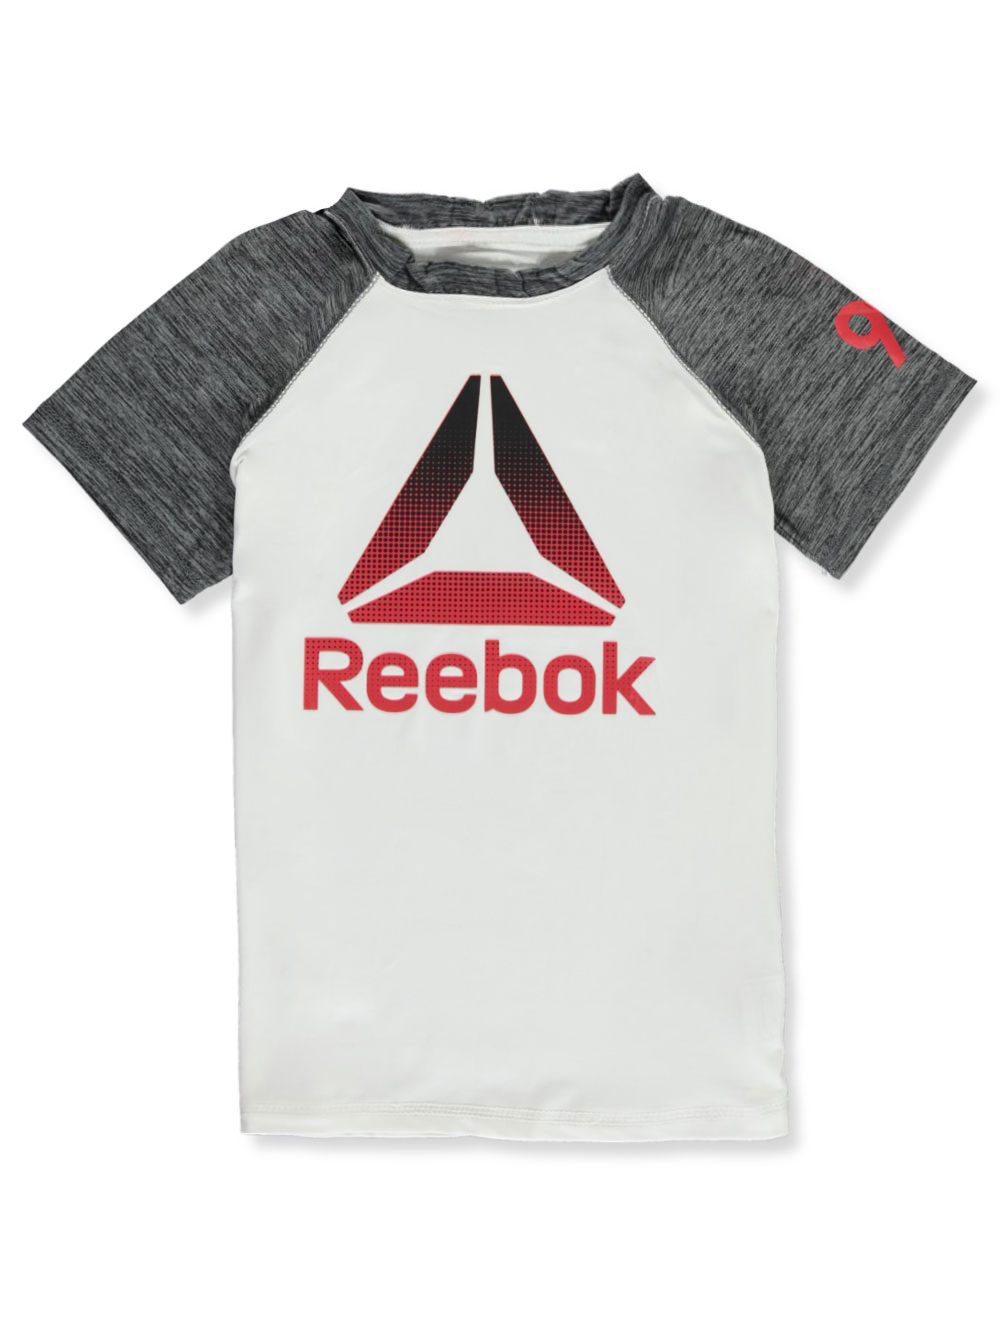 Reebok Boys' Raglan Performance T-Shirt